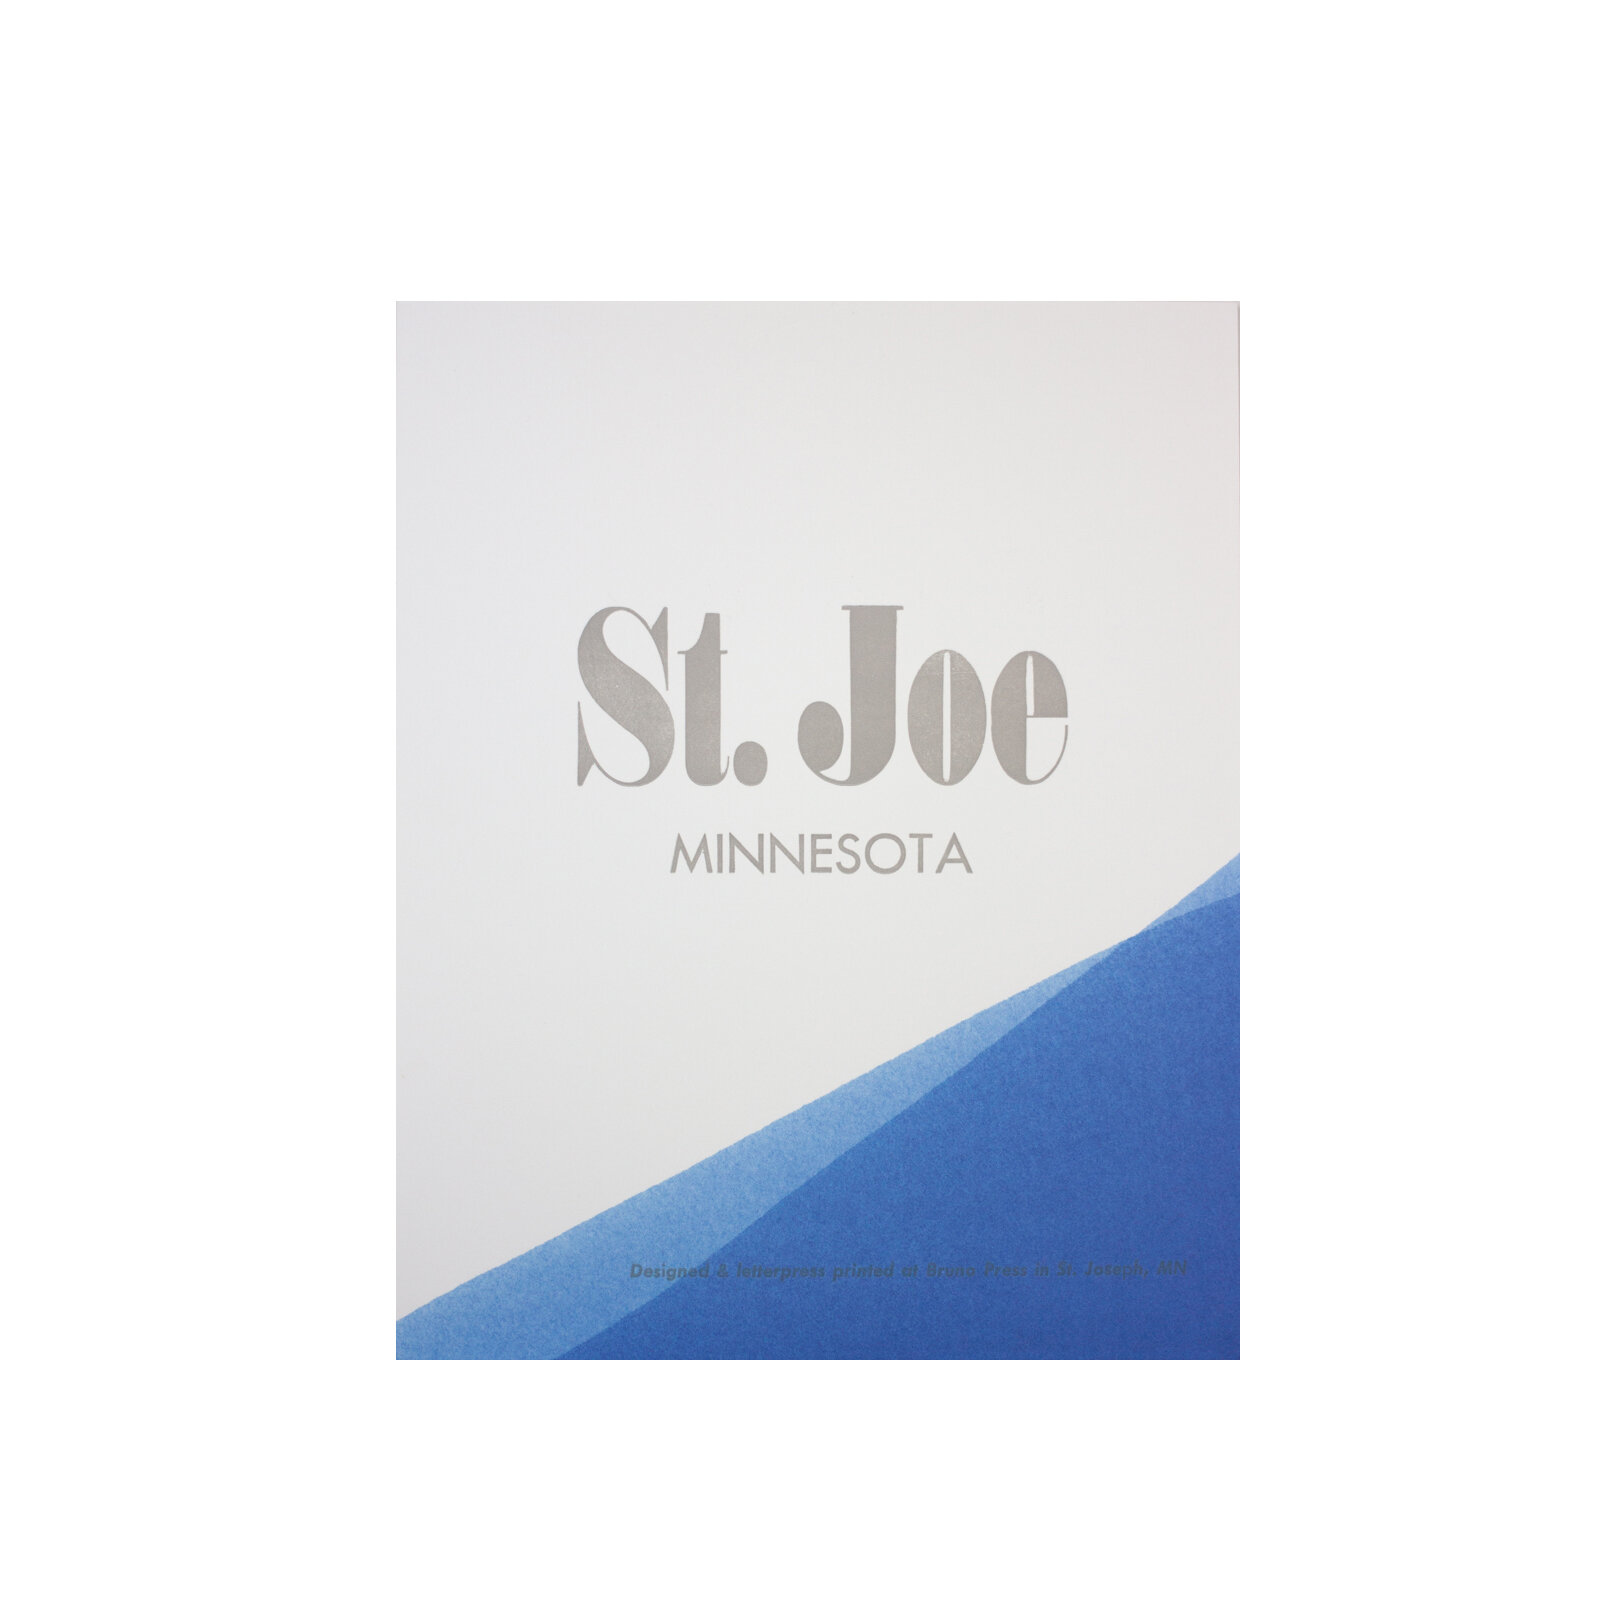 St. Joe_dip.jpg